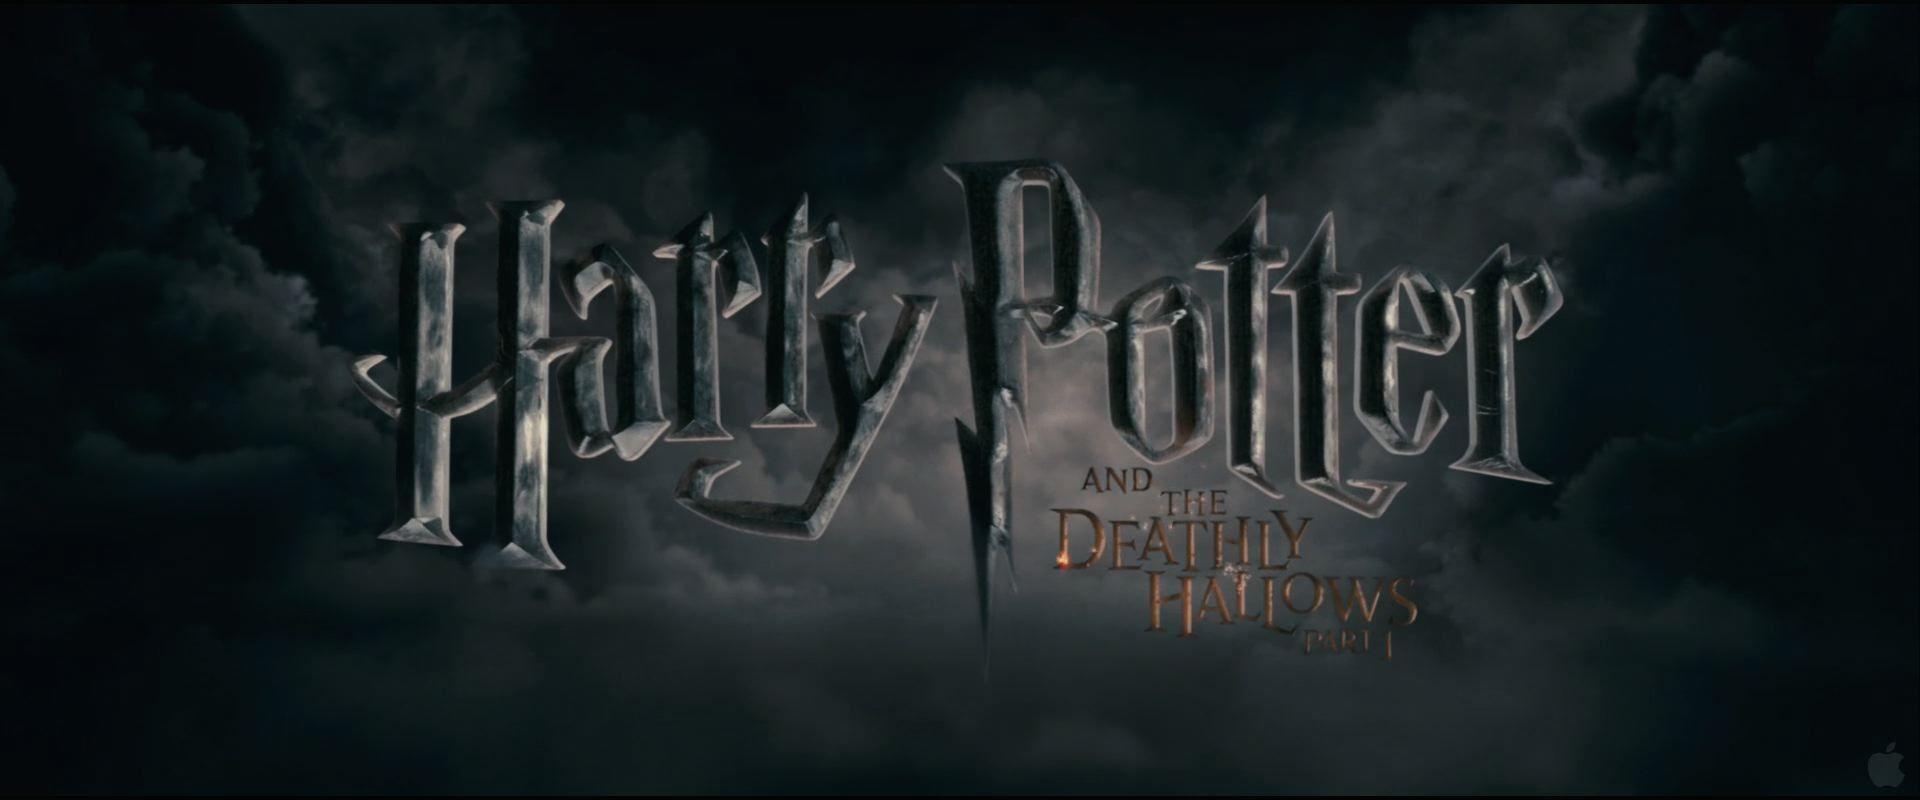 Harry Potter Movie Logo - Harry Potter and the Deathly Hallows Movie Logo Desktop Wallpaper